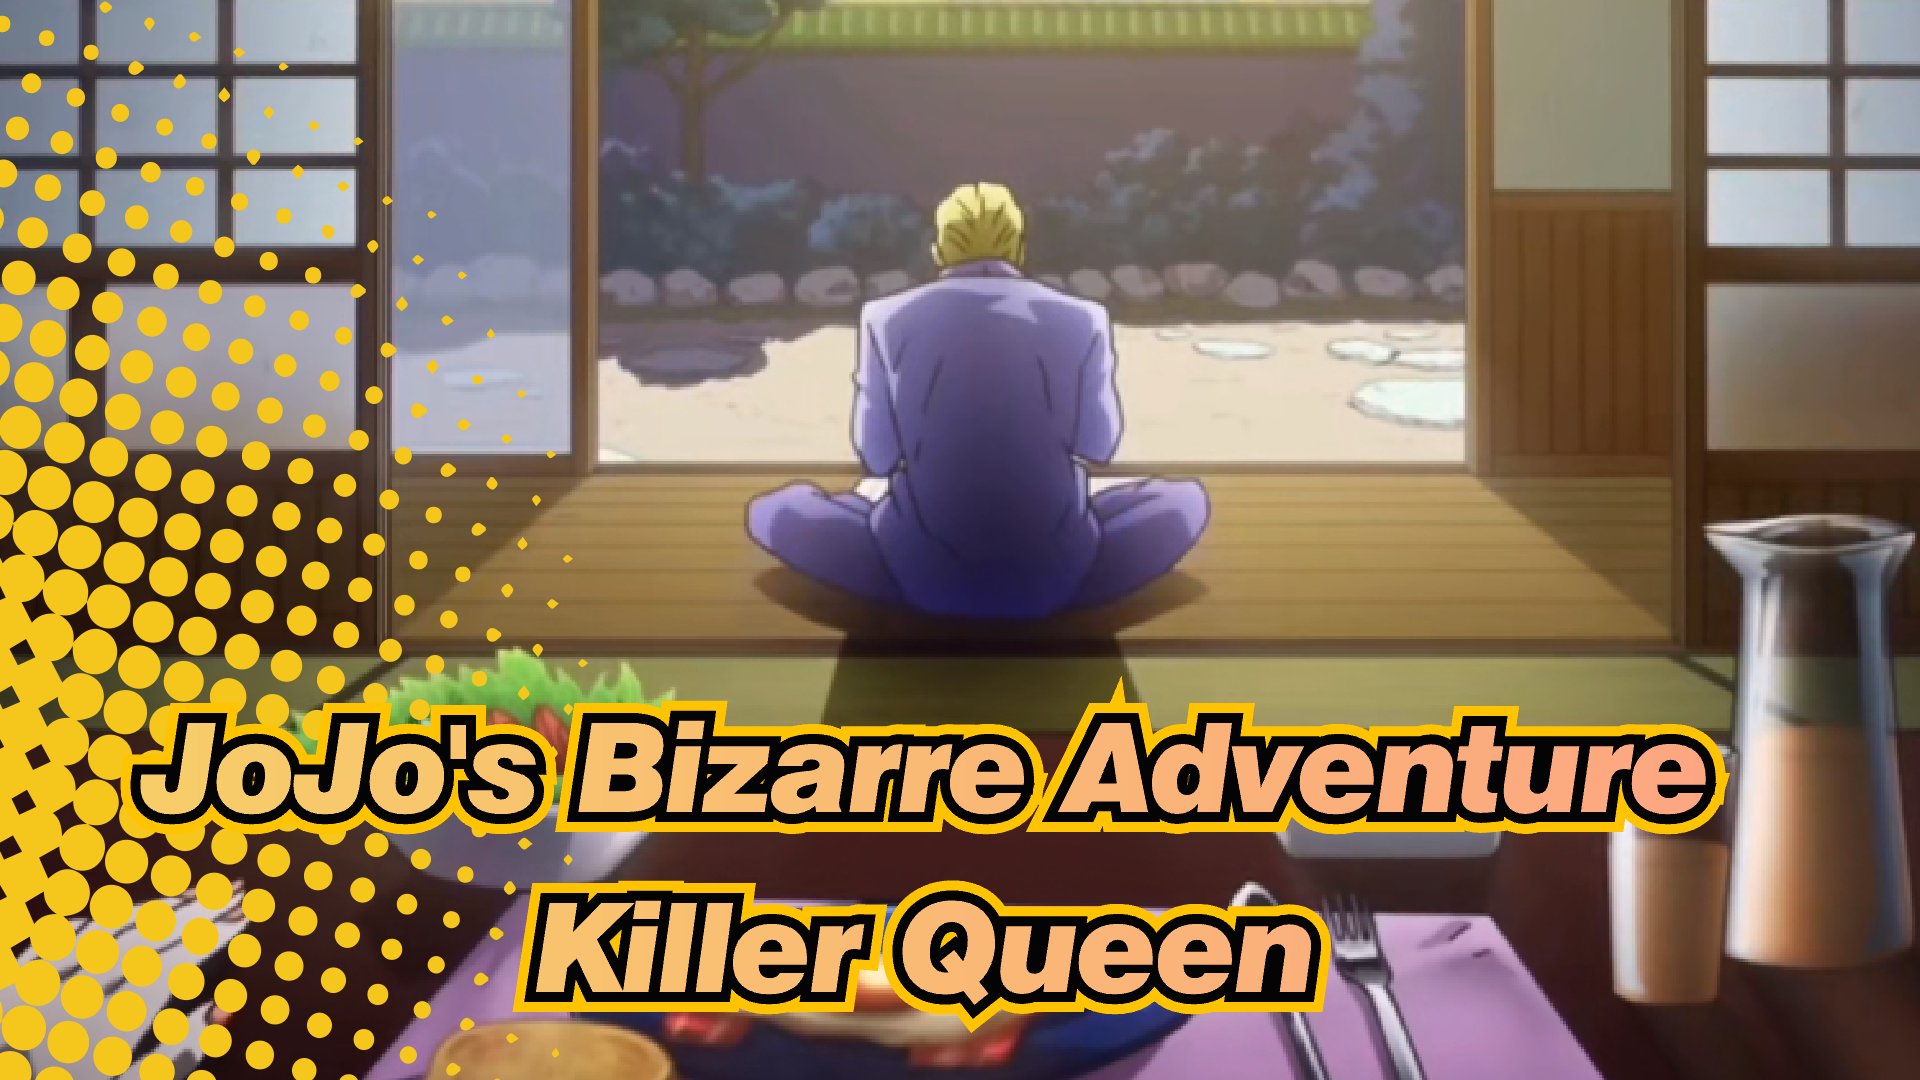 JoJo's Bizarre Adventure]Killer Queen - Bilibili